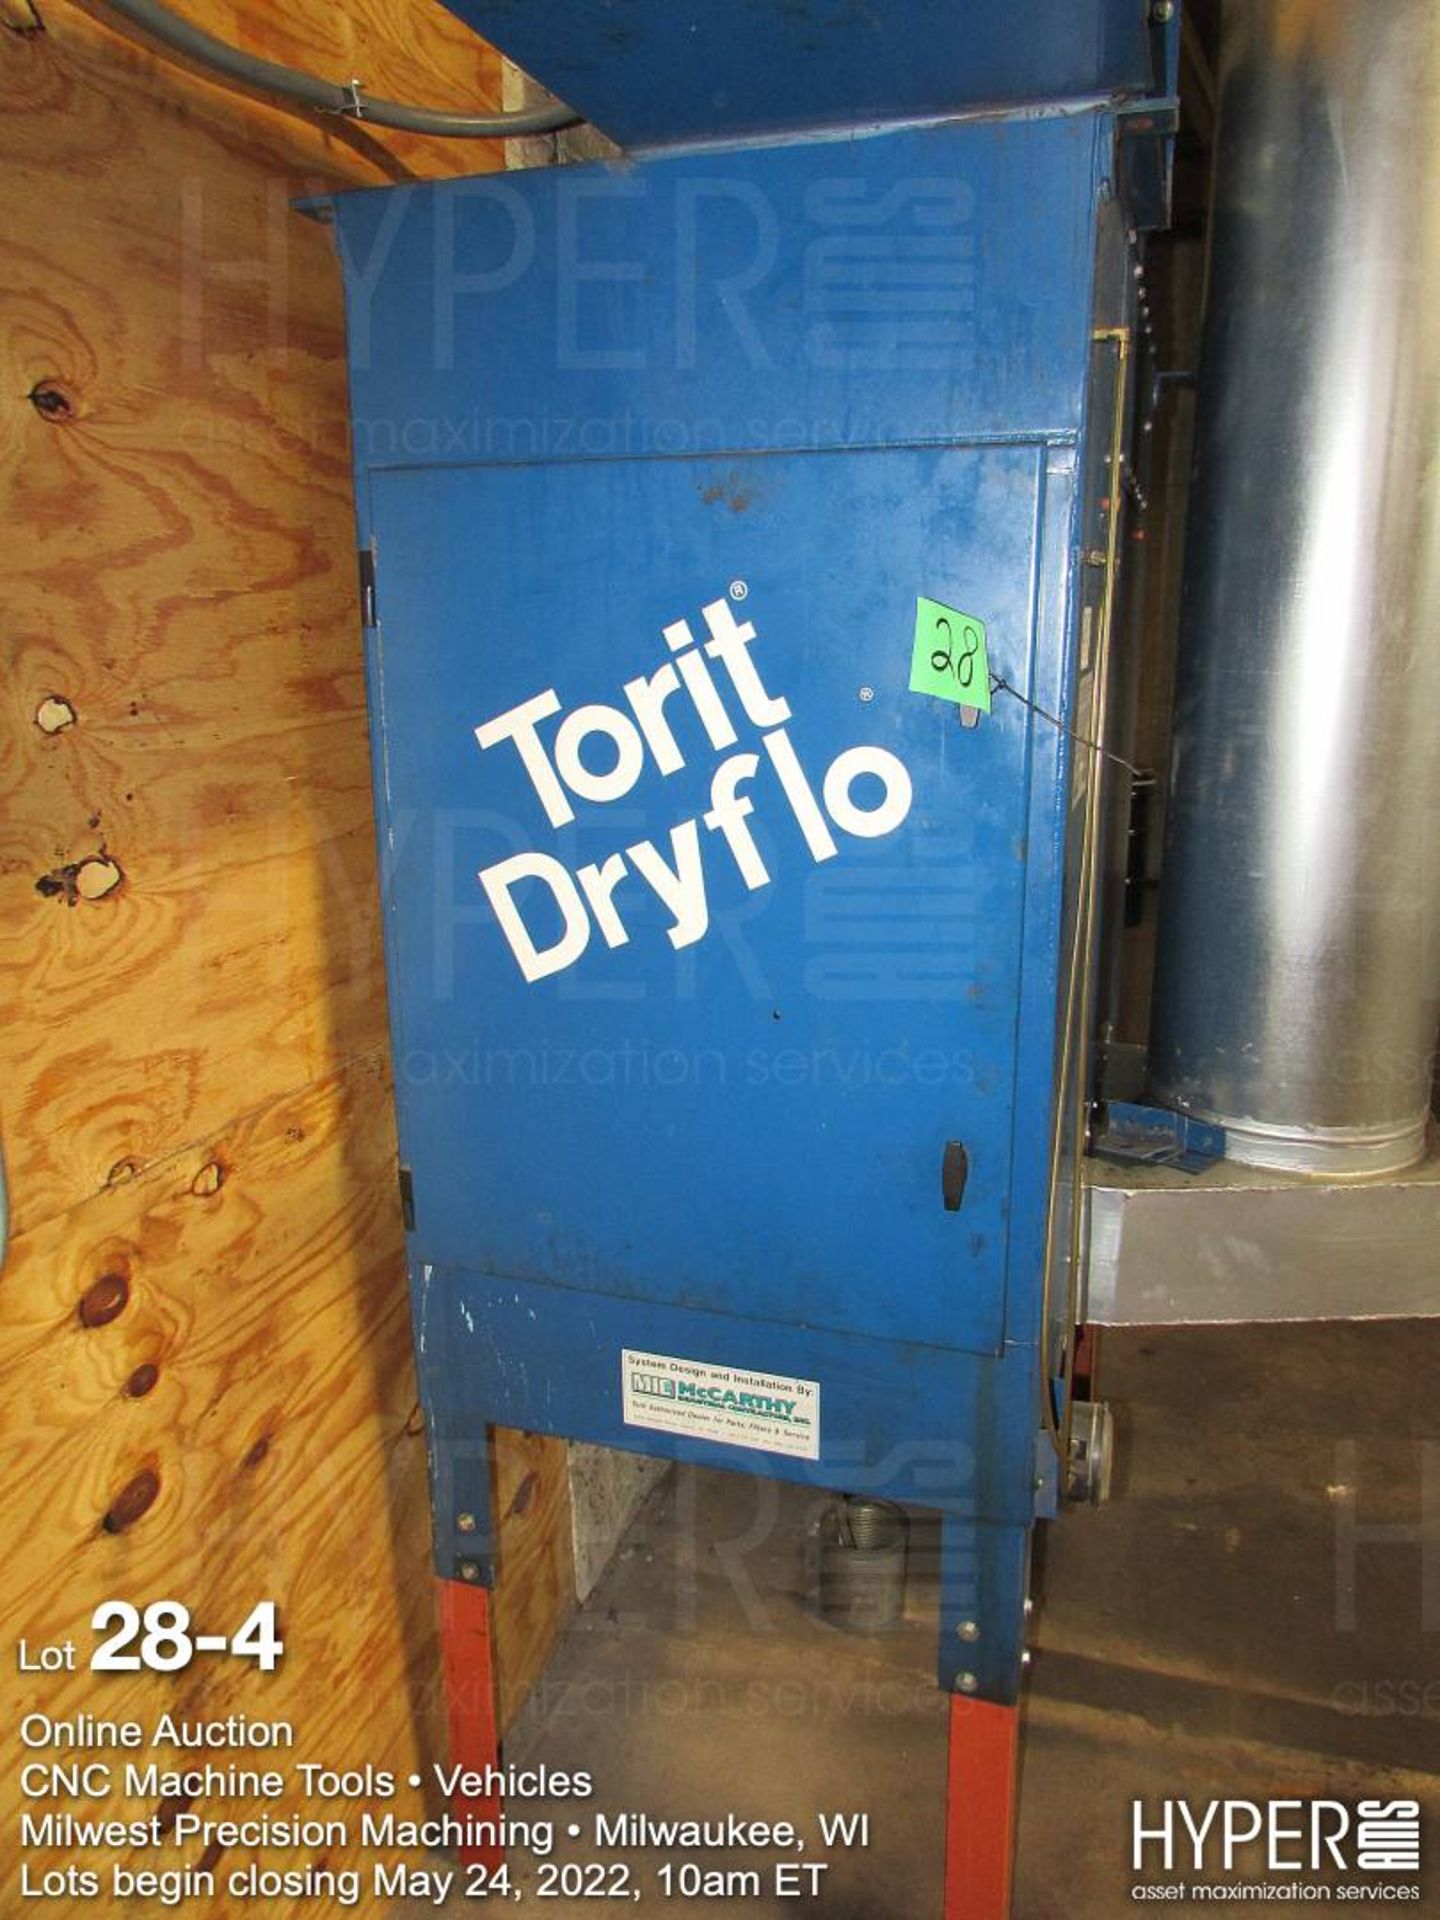 Torit Dryflo model: DMC-D2 dust collector, S/N IG622466 with 10 HP Torit power-pack blower 2SG - Image 4 of 7